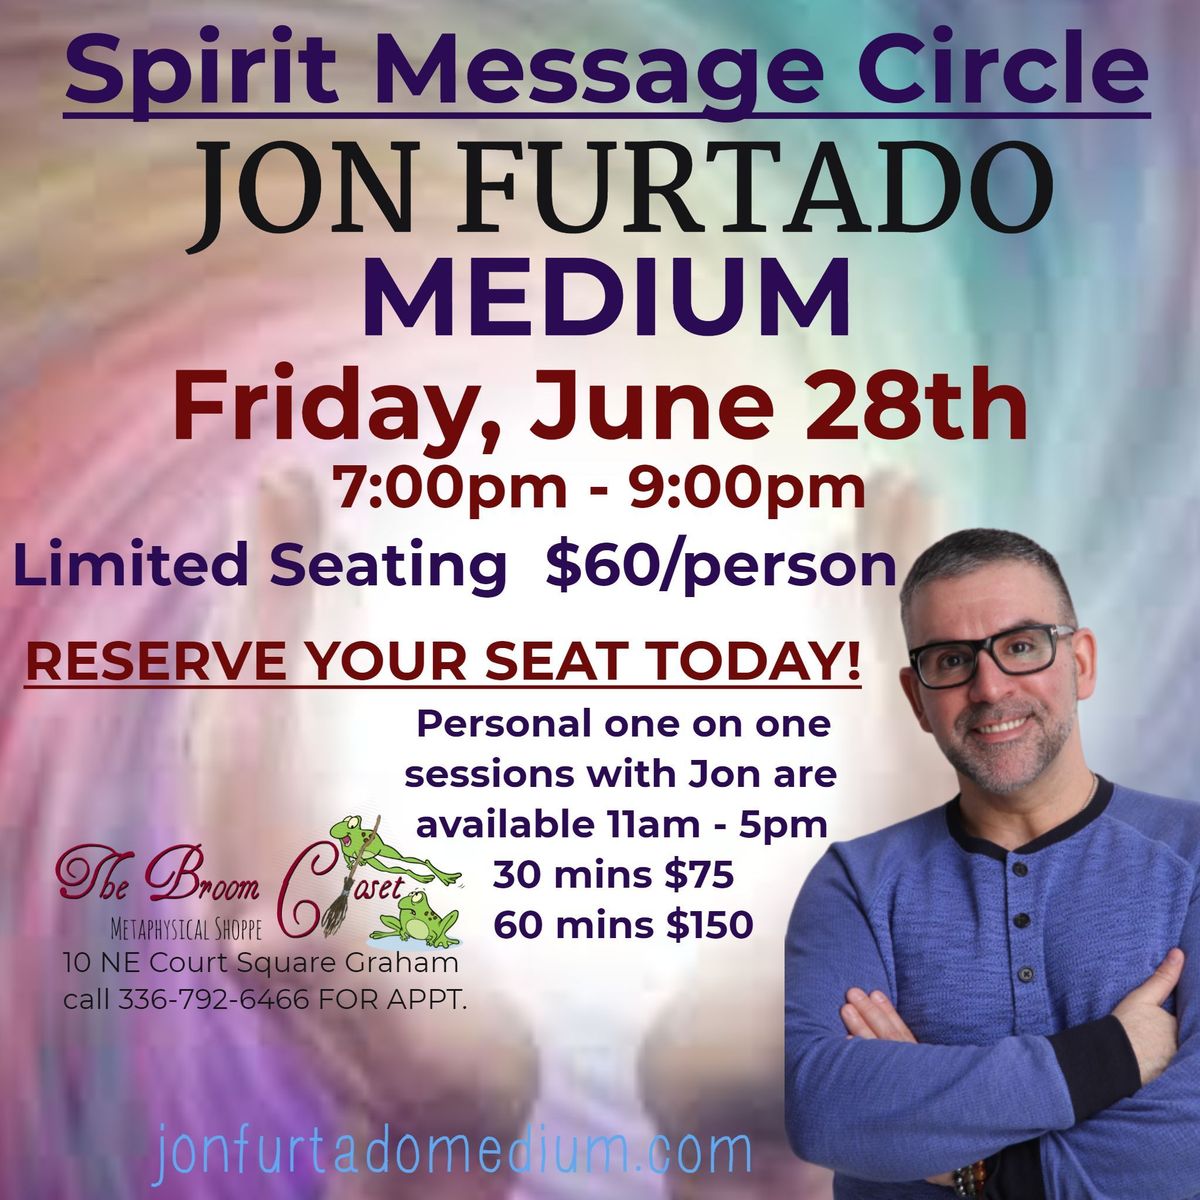 Spirit Message Circle with JON FURTADO MEDIUM